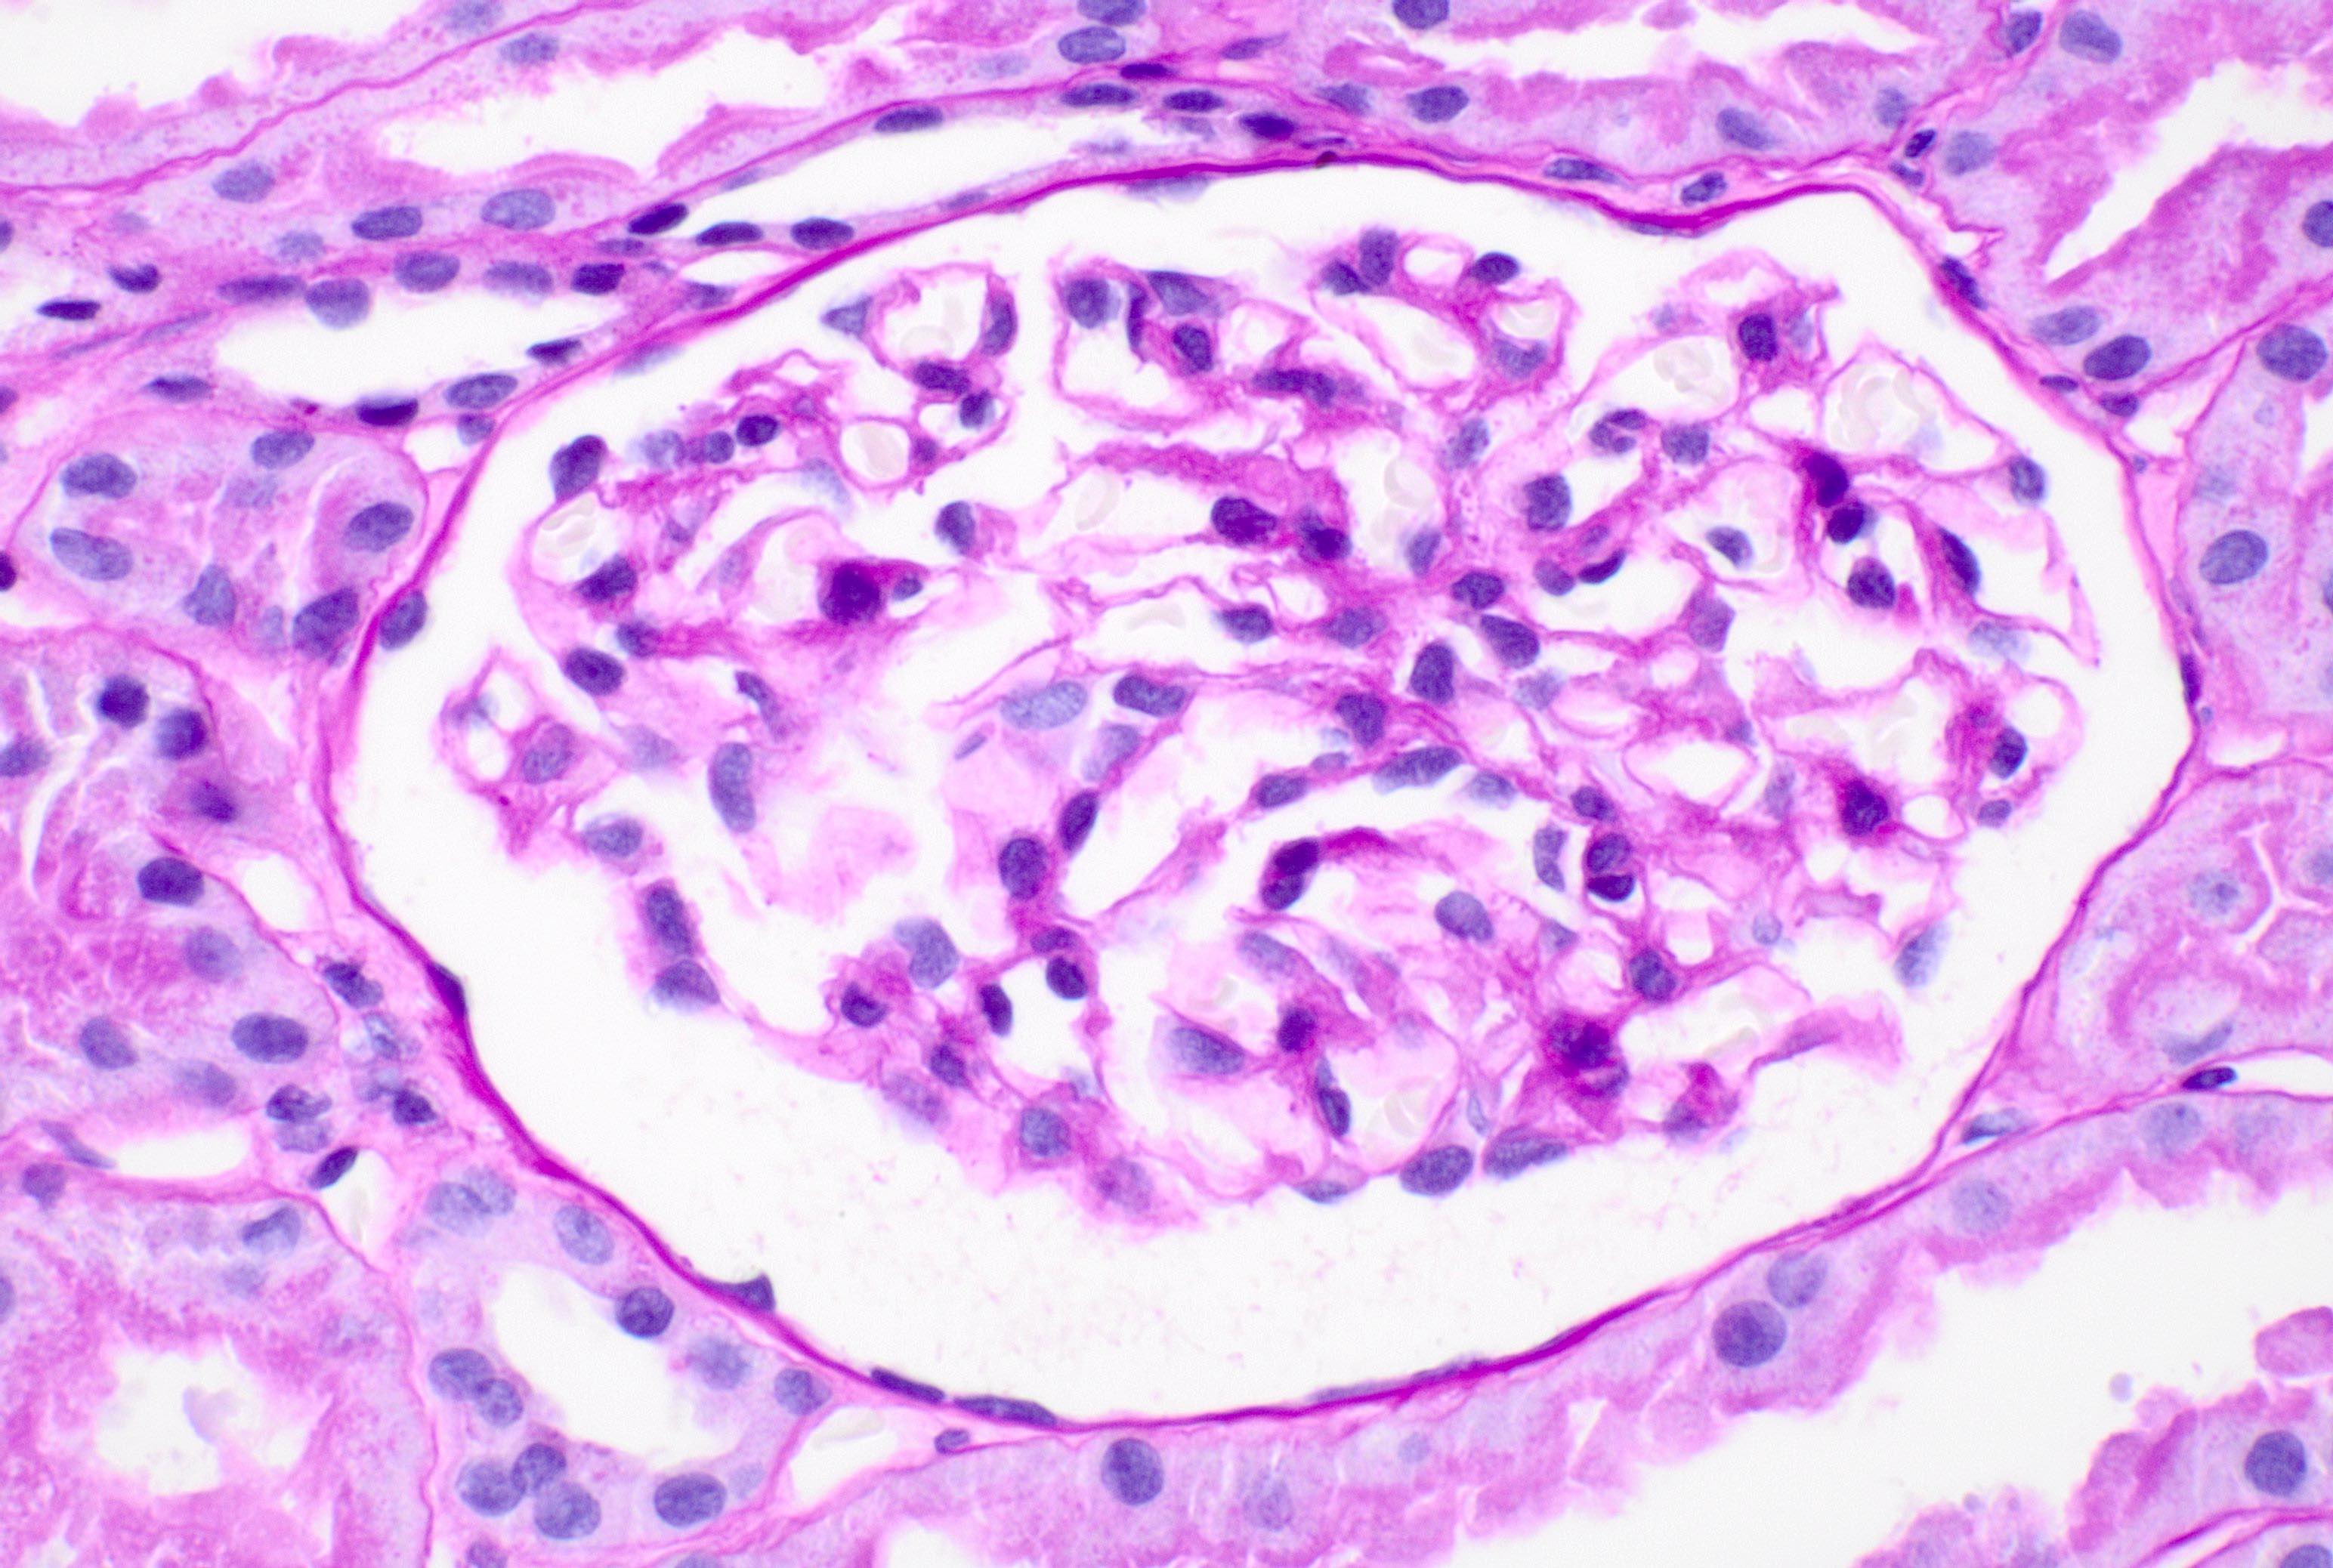 Normal glomerulus